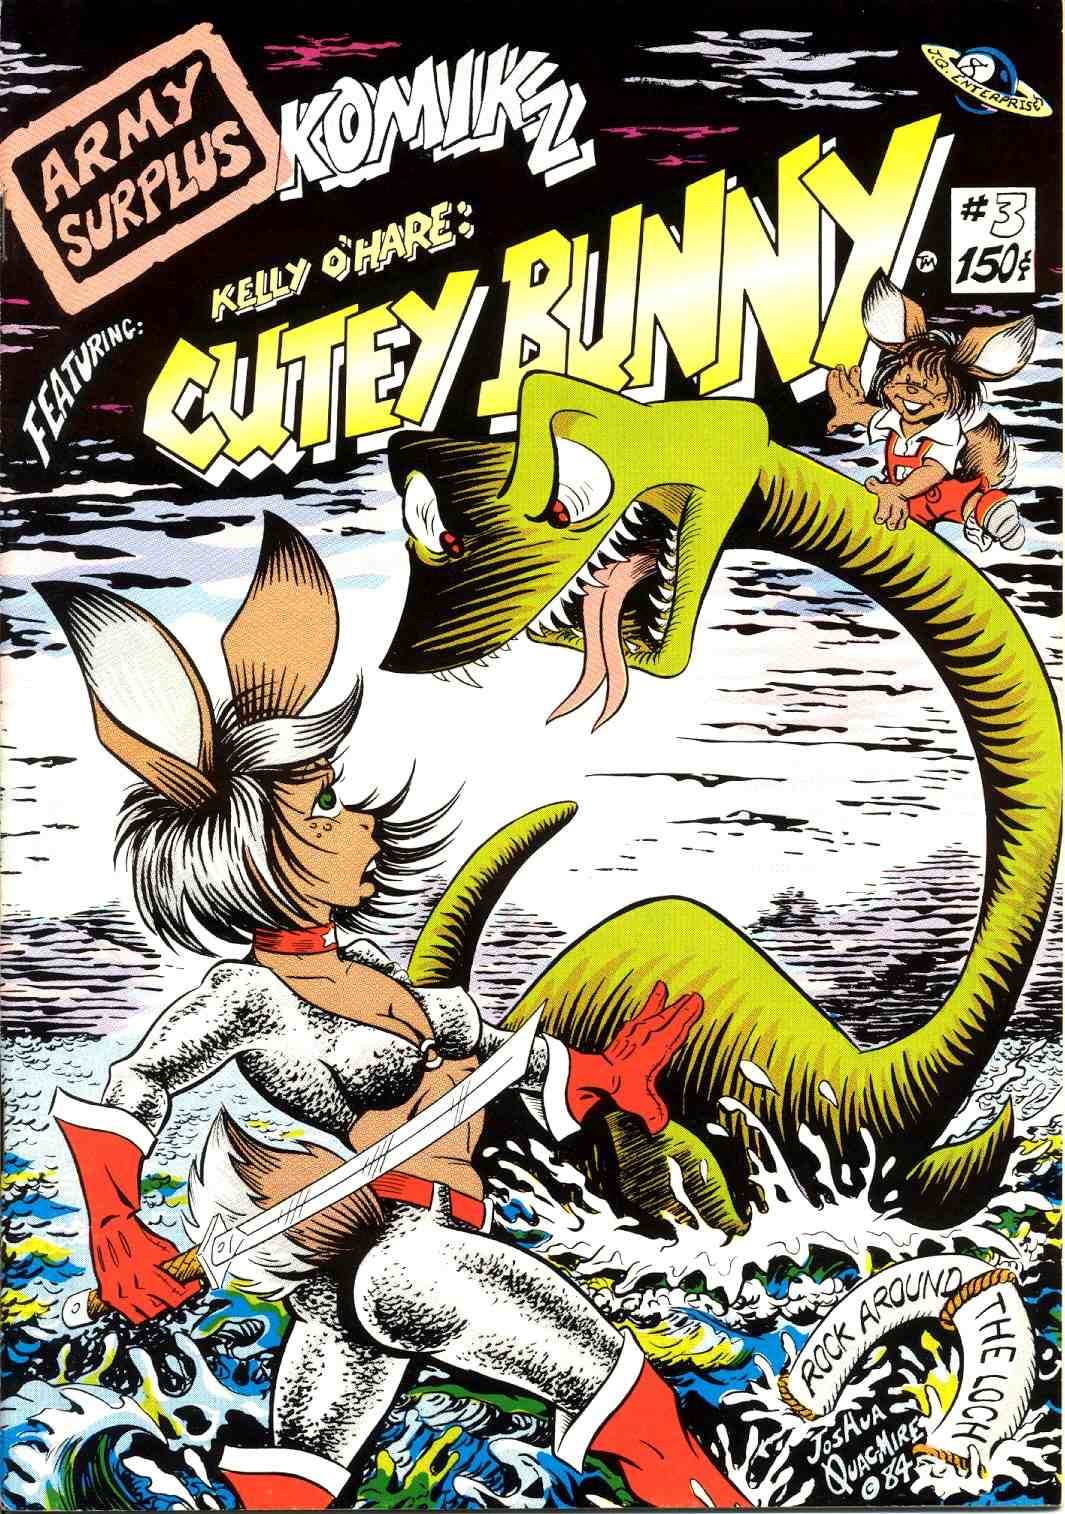 Read online Army  Surplus Komikz Featuring: Cutey Bunny comic -  Issue #3 - 1